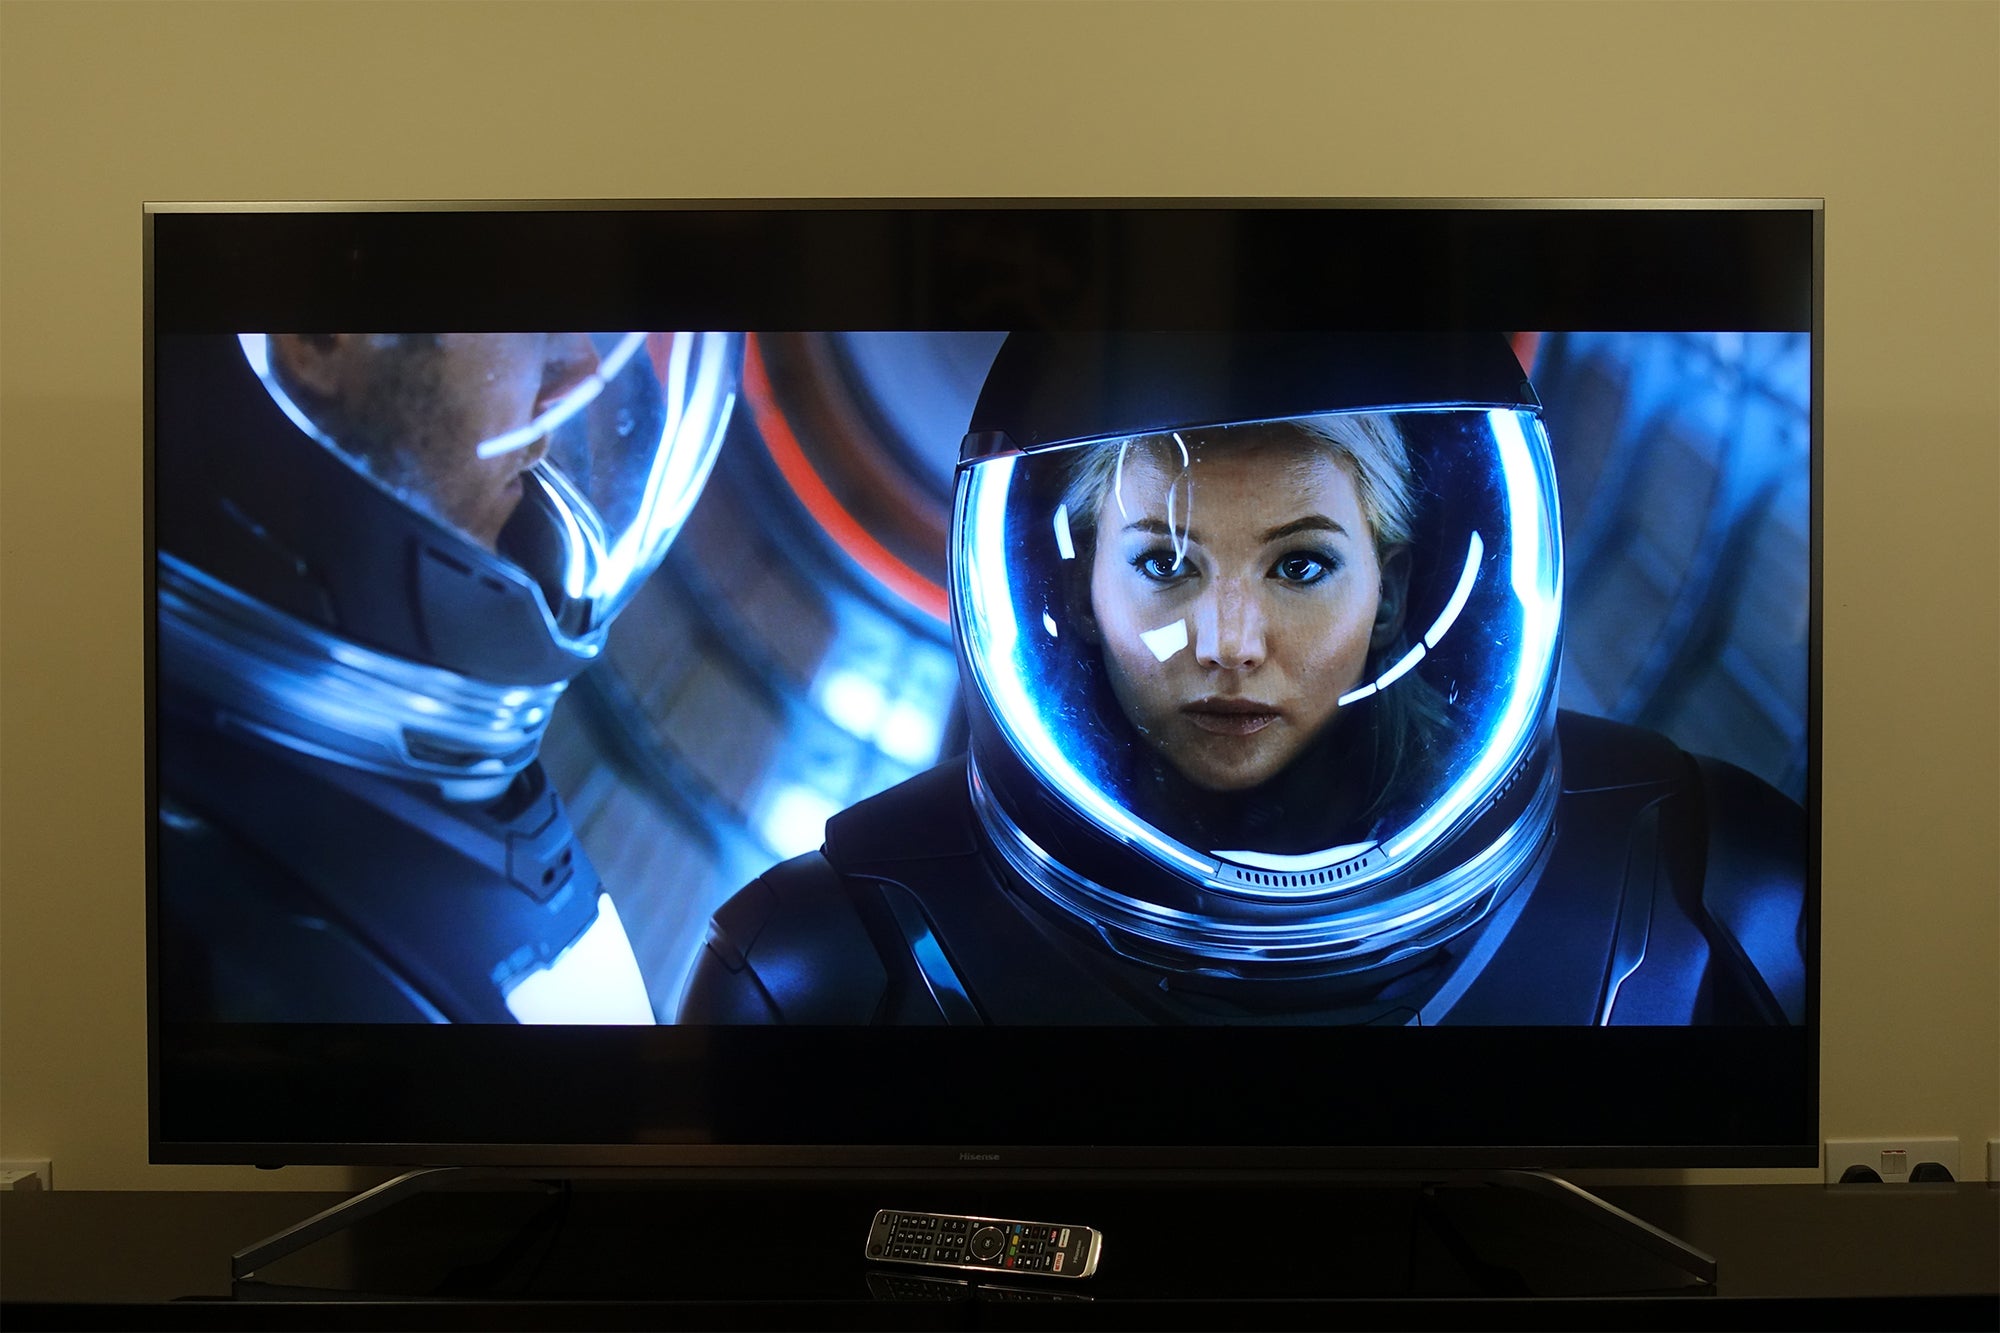 Hisense H70NU9700 TV displaying a high-definition movie scene.